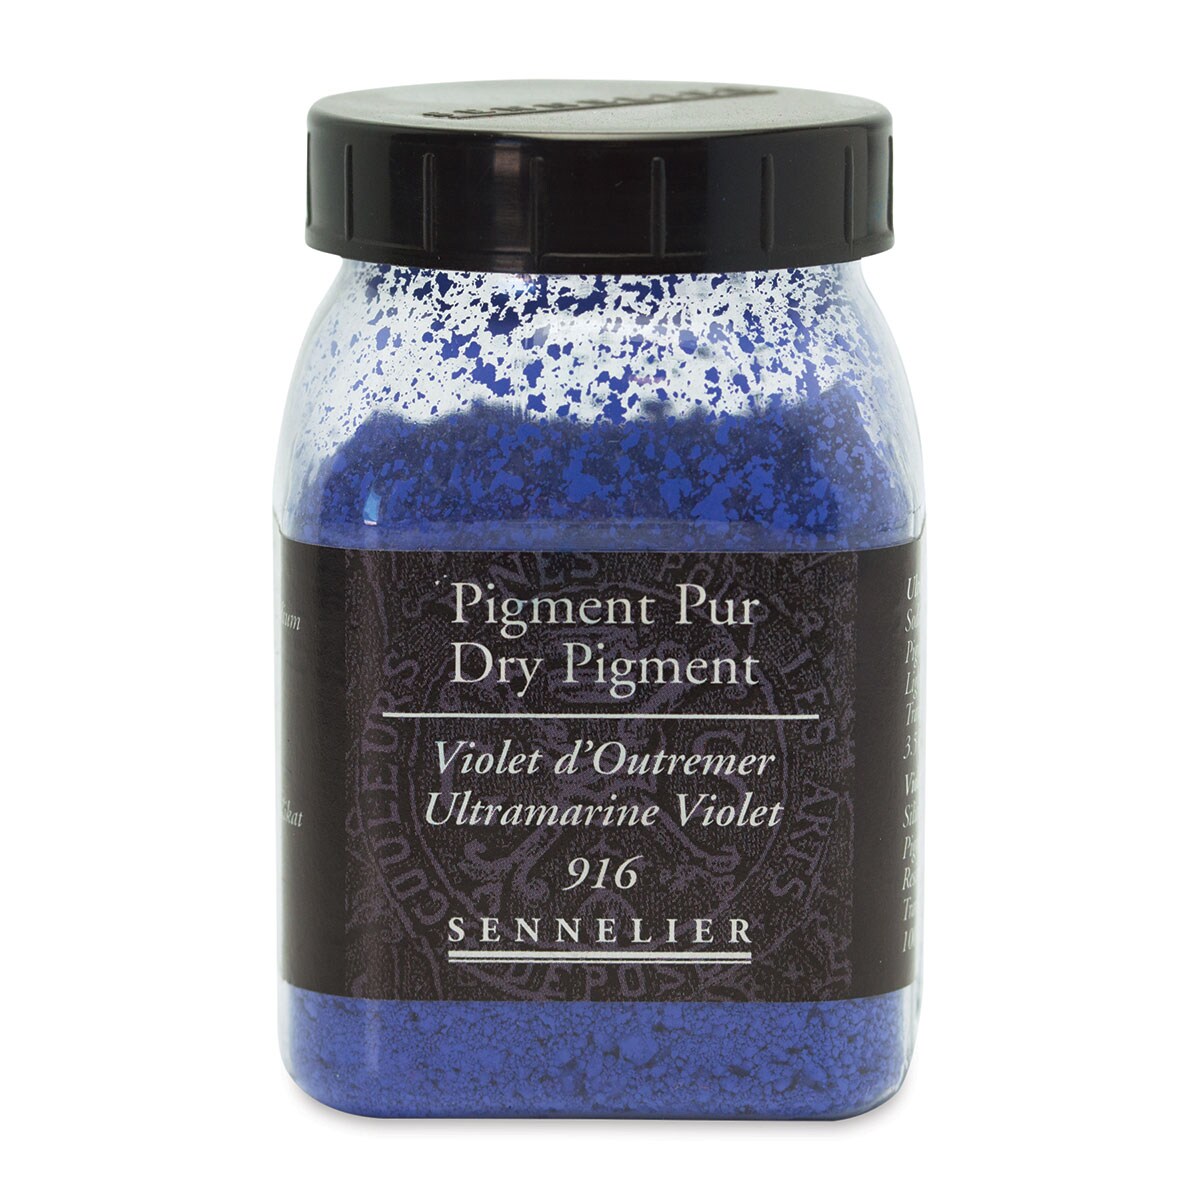 Sennelier Dry Pigment - Ultramarine Violet, 100 g jar